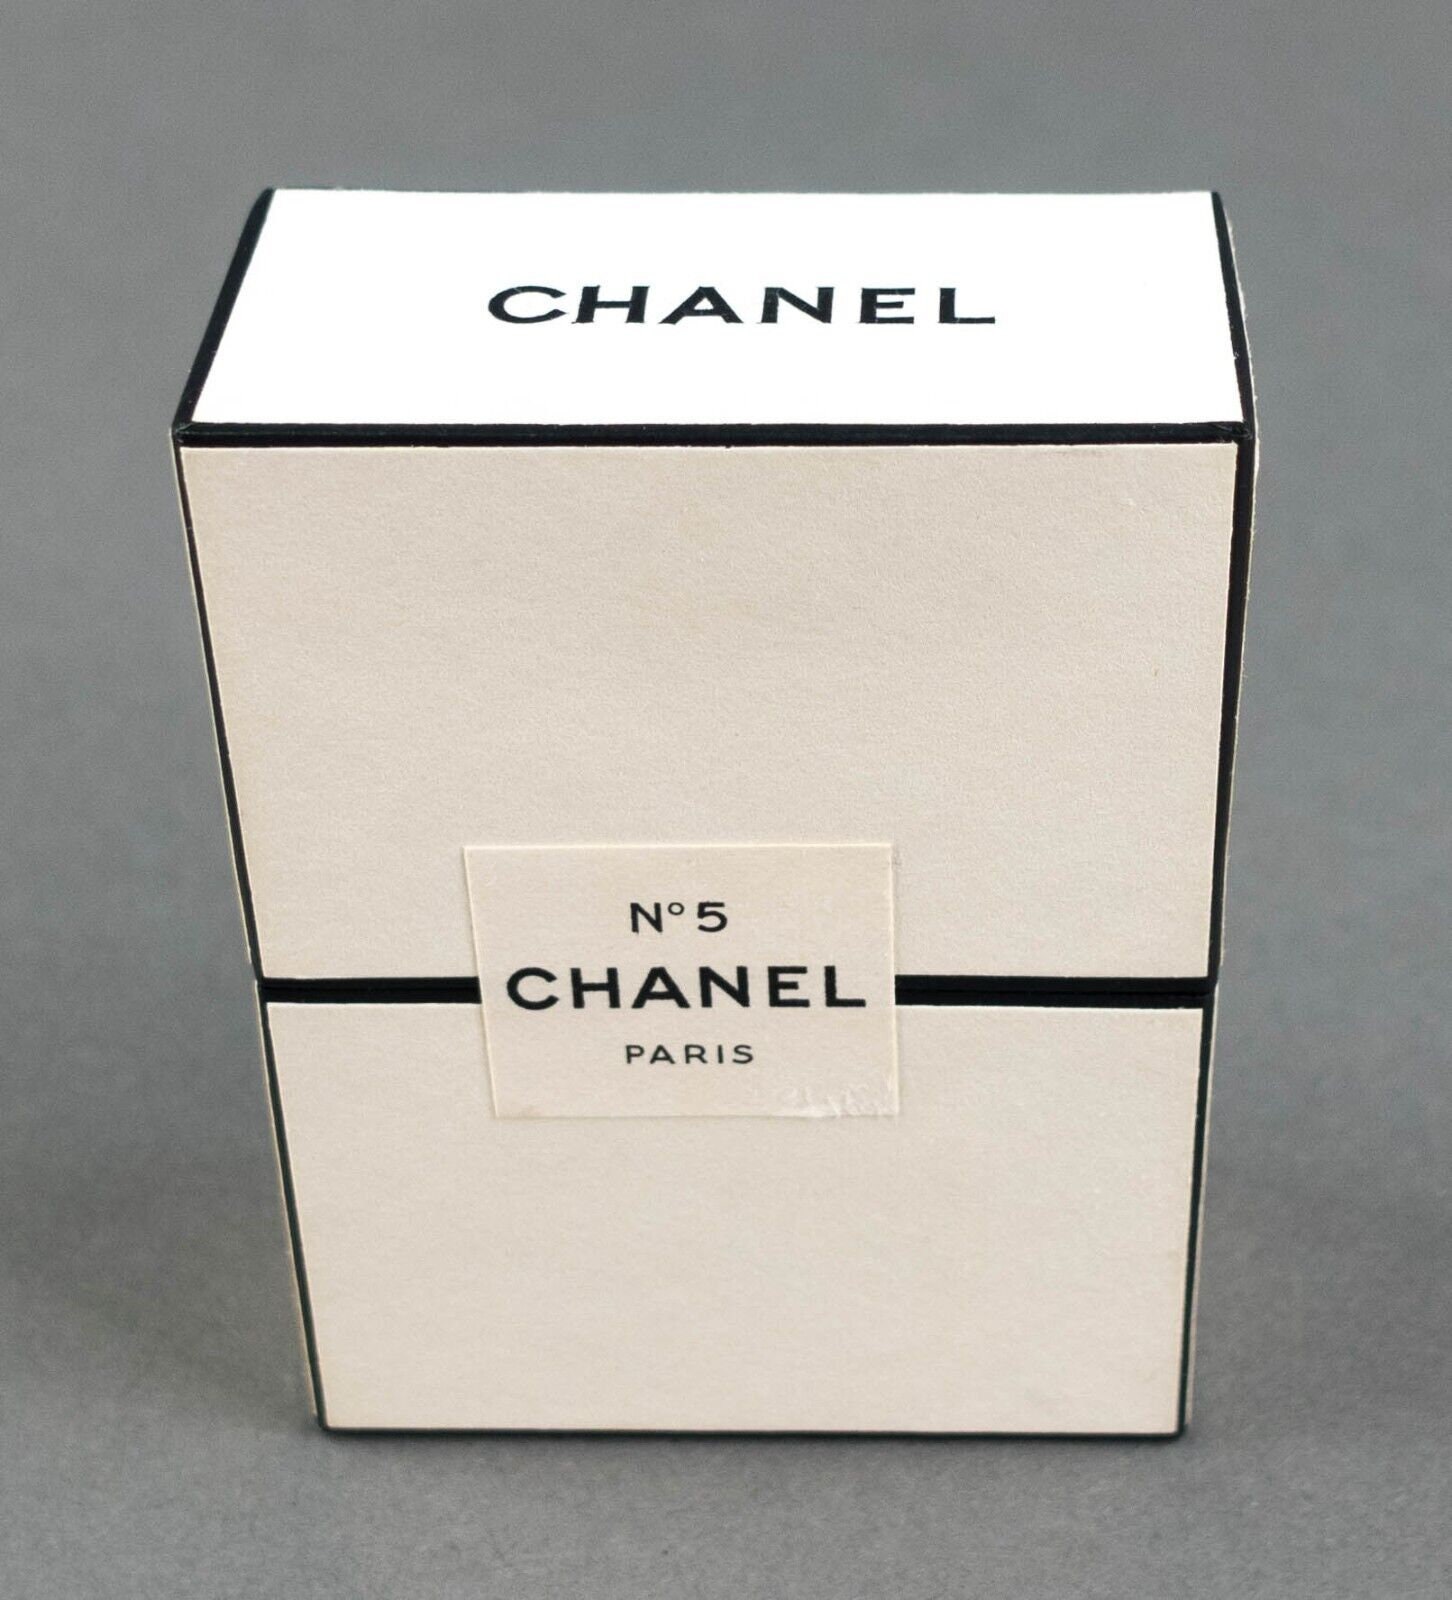 Chanel France No 5 Parfum Perfume Extrait 1 Oz / 28 Ml PM 201